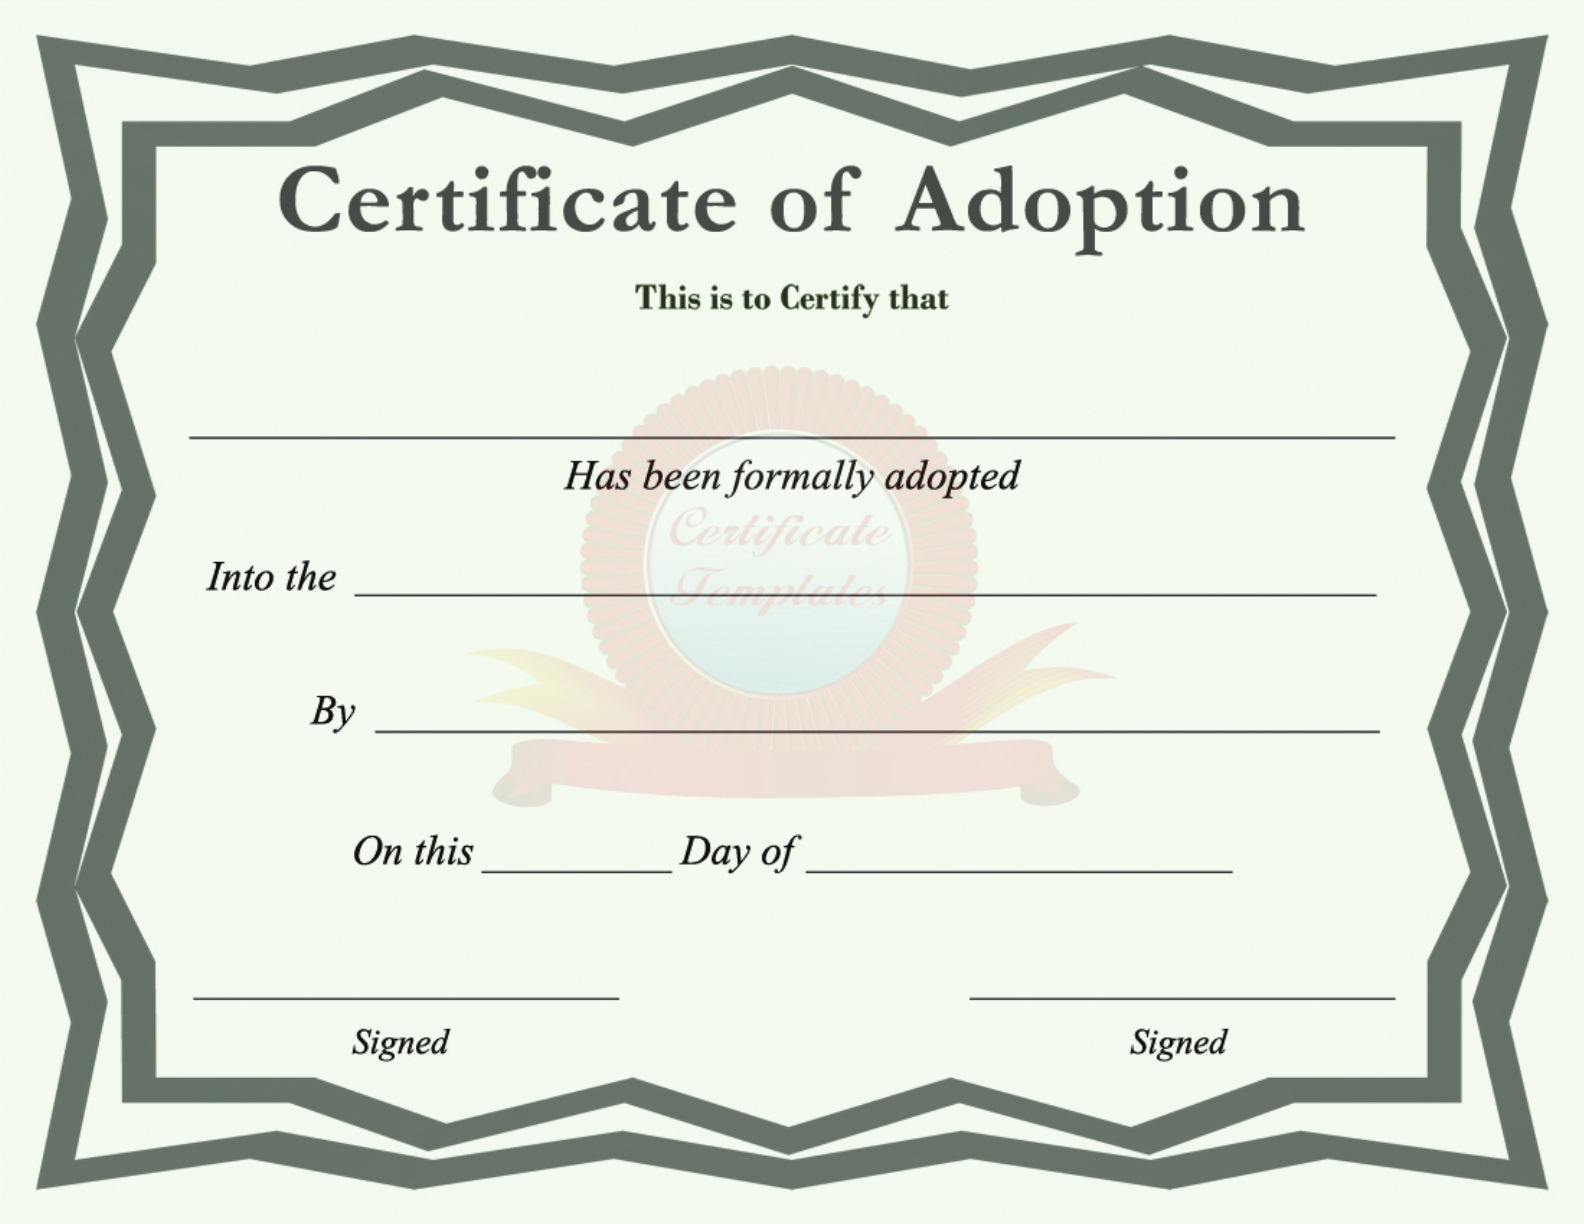 free-certificate-of-adoption-pdf-5105kb-1-page-s